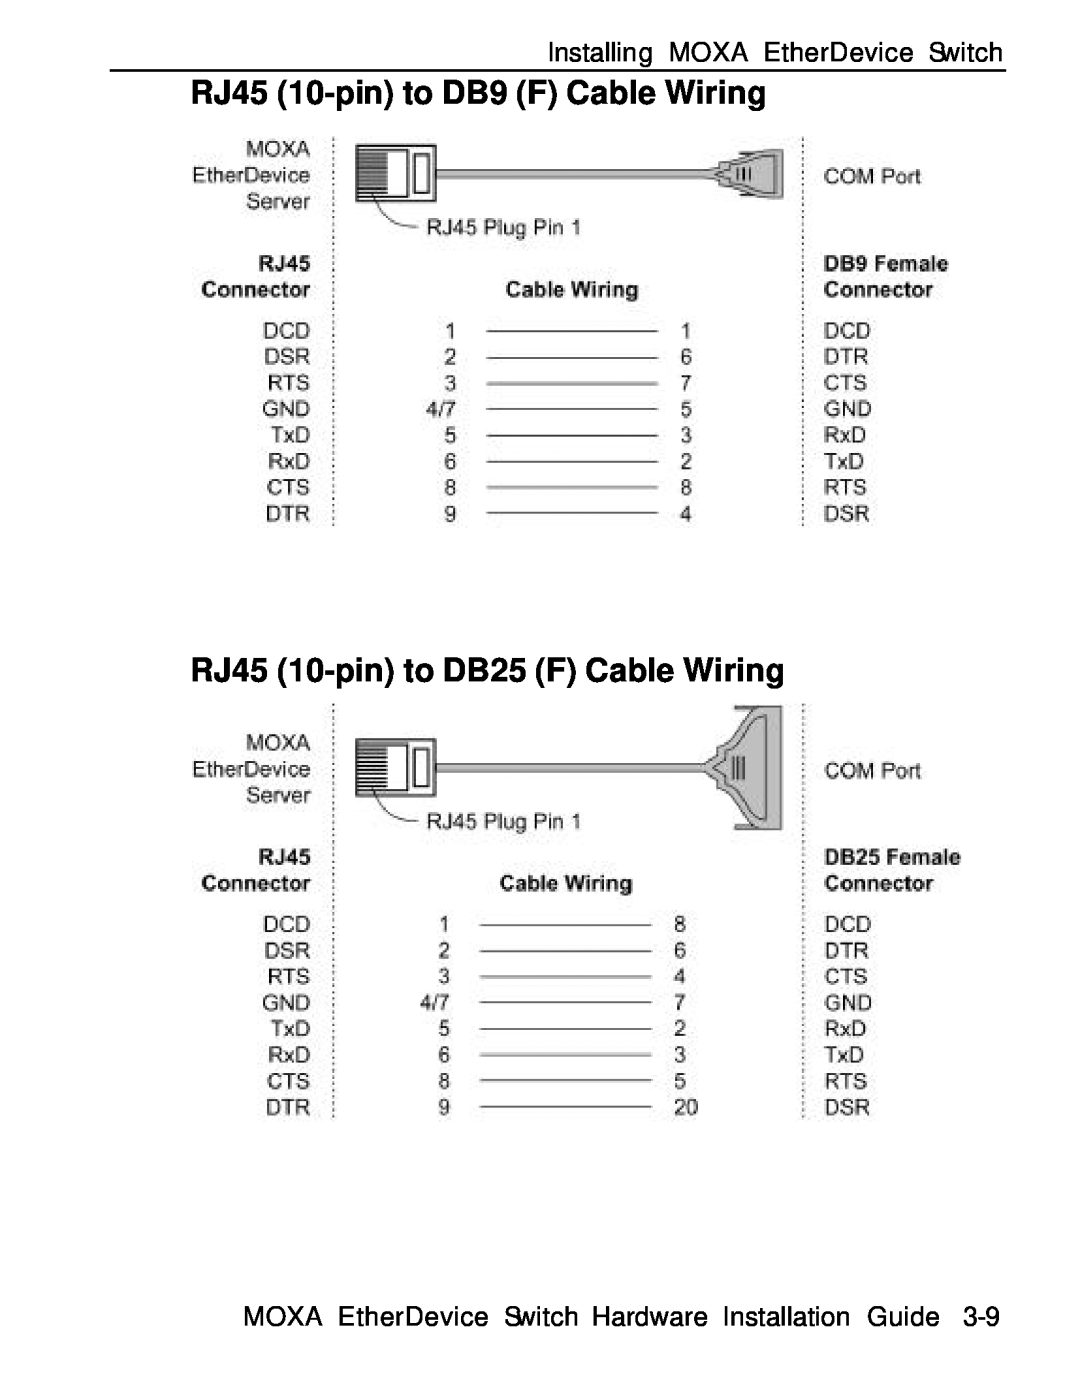 Moxa Technologies EDS-508 manual RJ45 10-pin to DB9 F Cable Wiring RJ45 10-pin to DB25 F Cable Wiring 